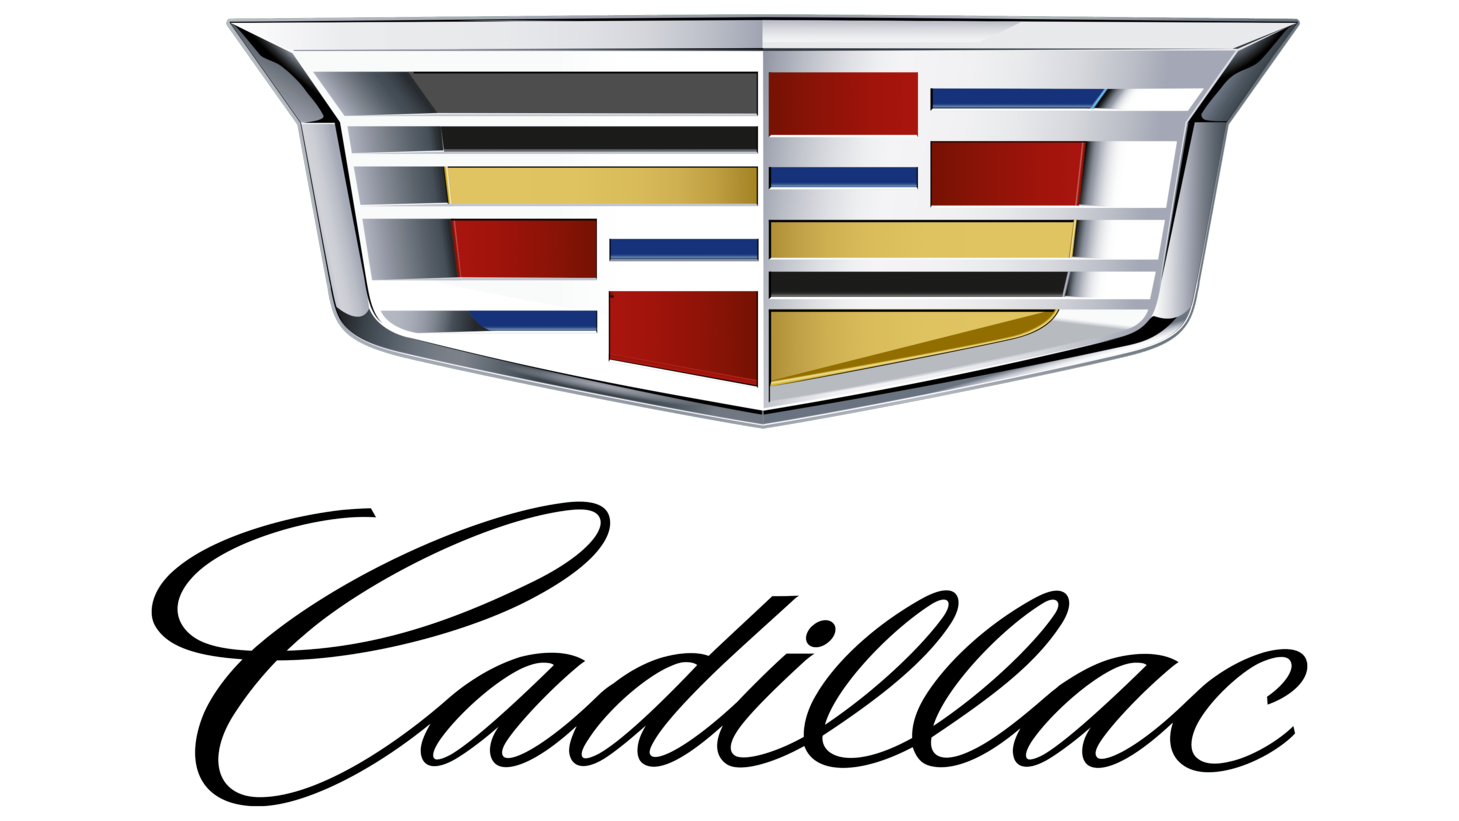 Cadillac sign 2014 present